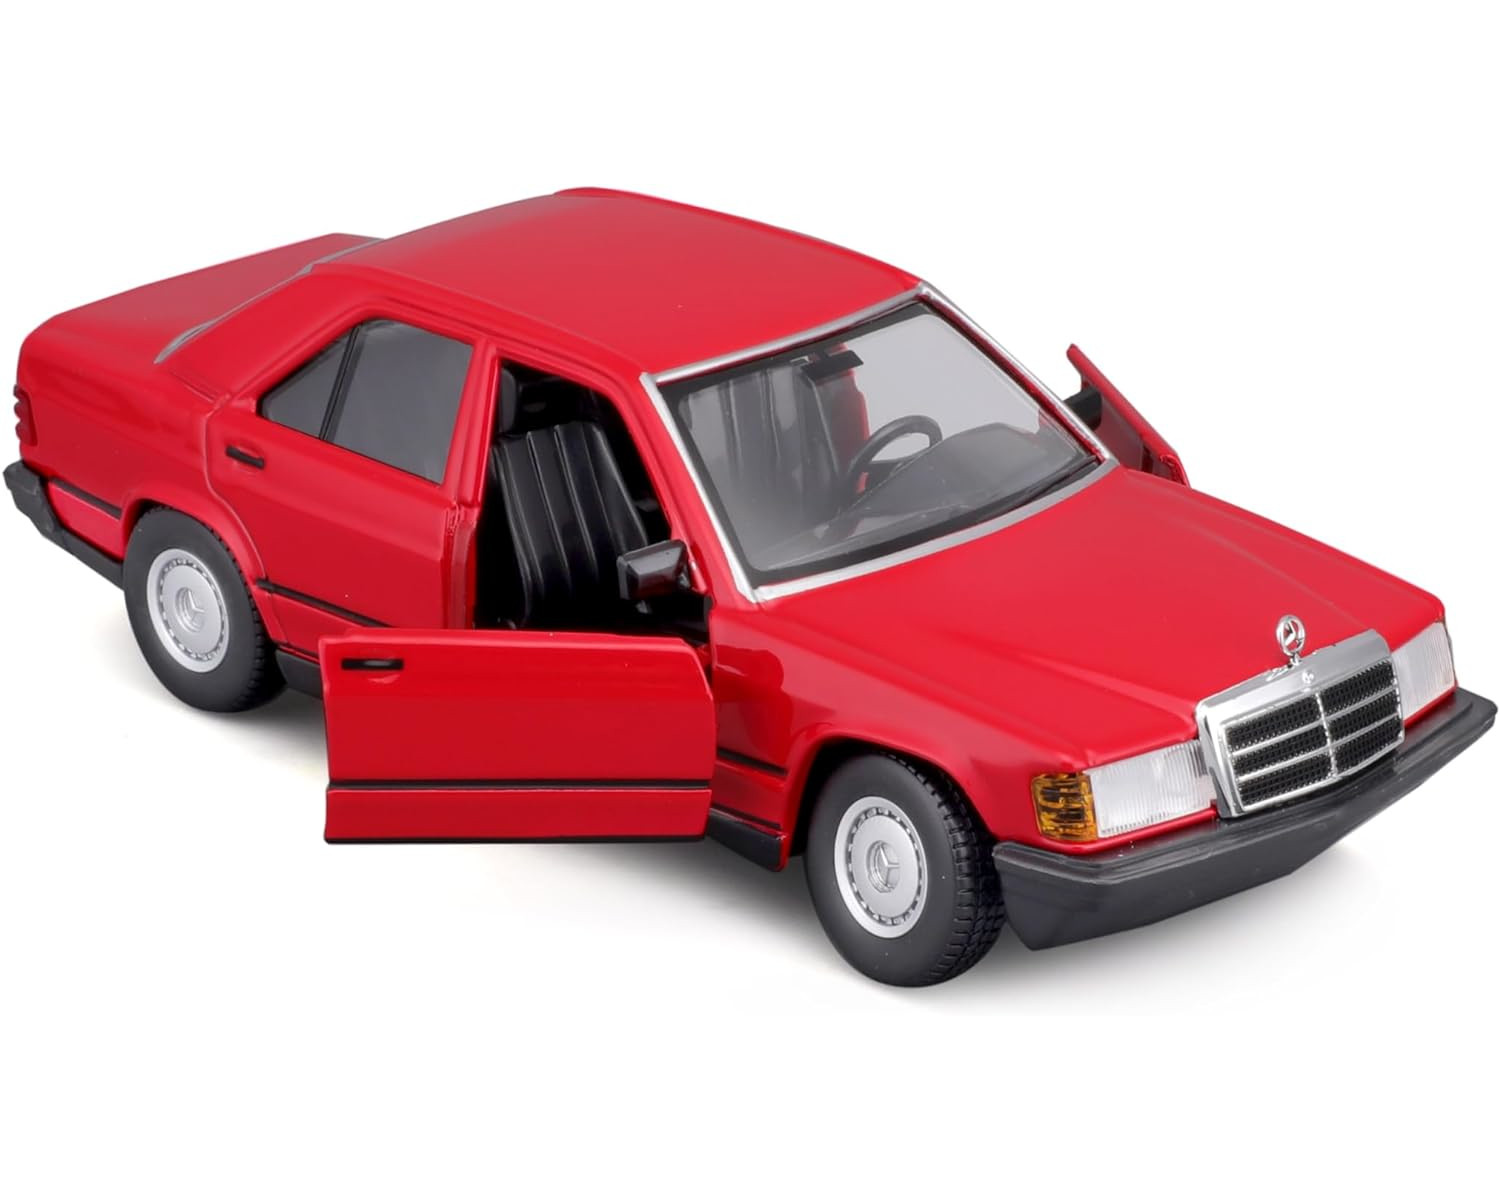 1:24) 190E Maßstab ´87 BBURAGO (rot, Spielzeugauto Mercedes